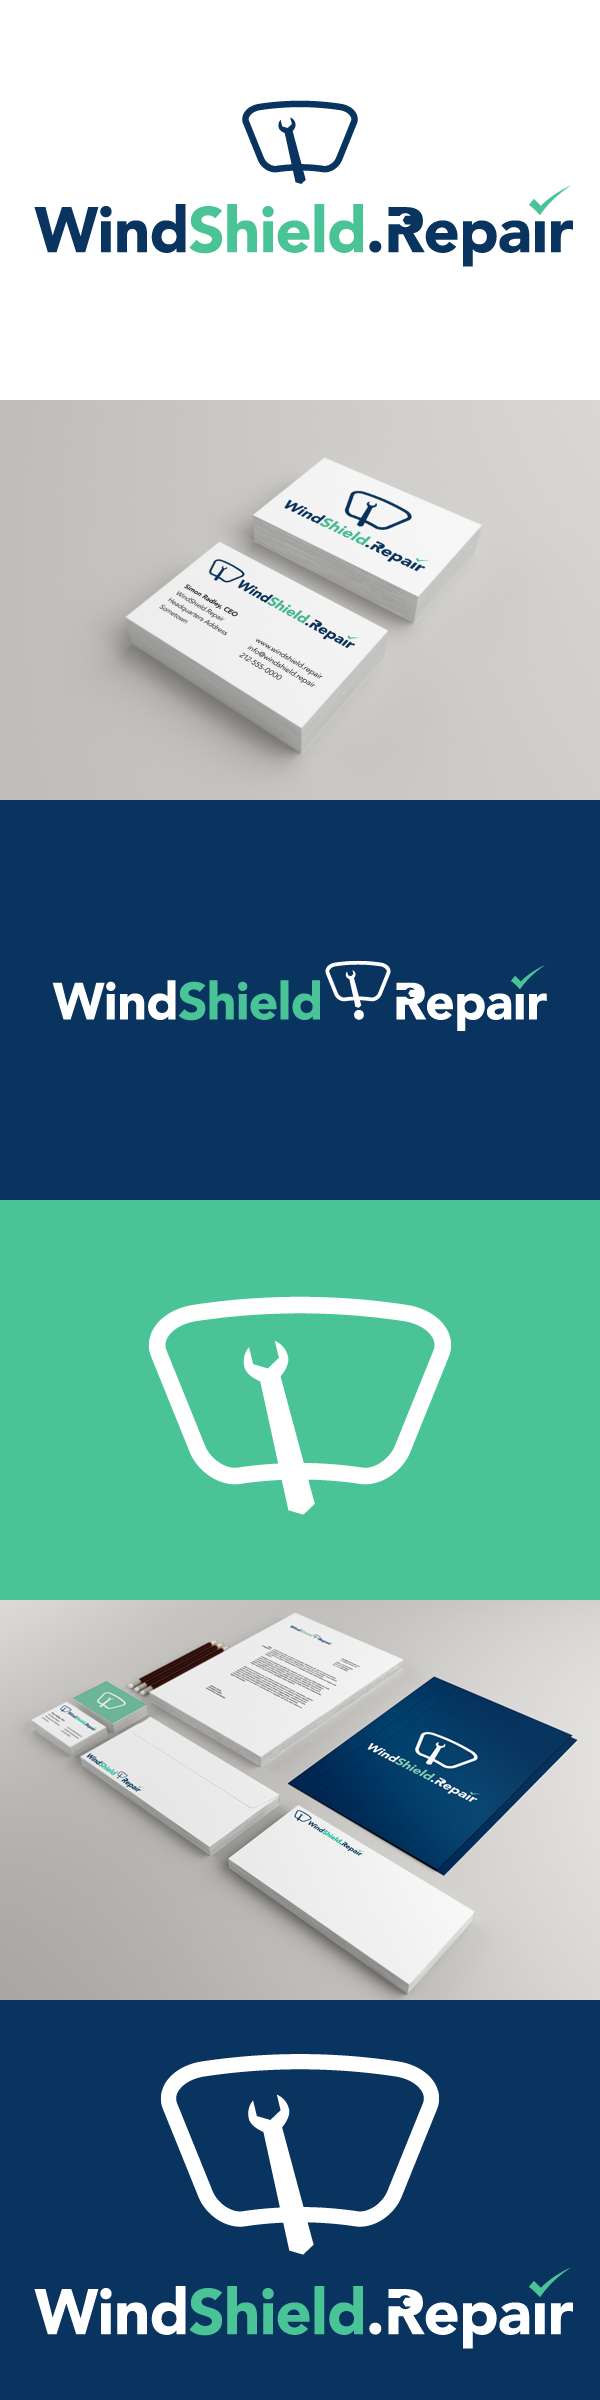 windshield-repair.png